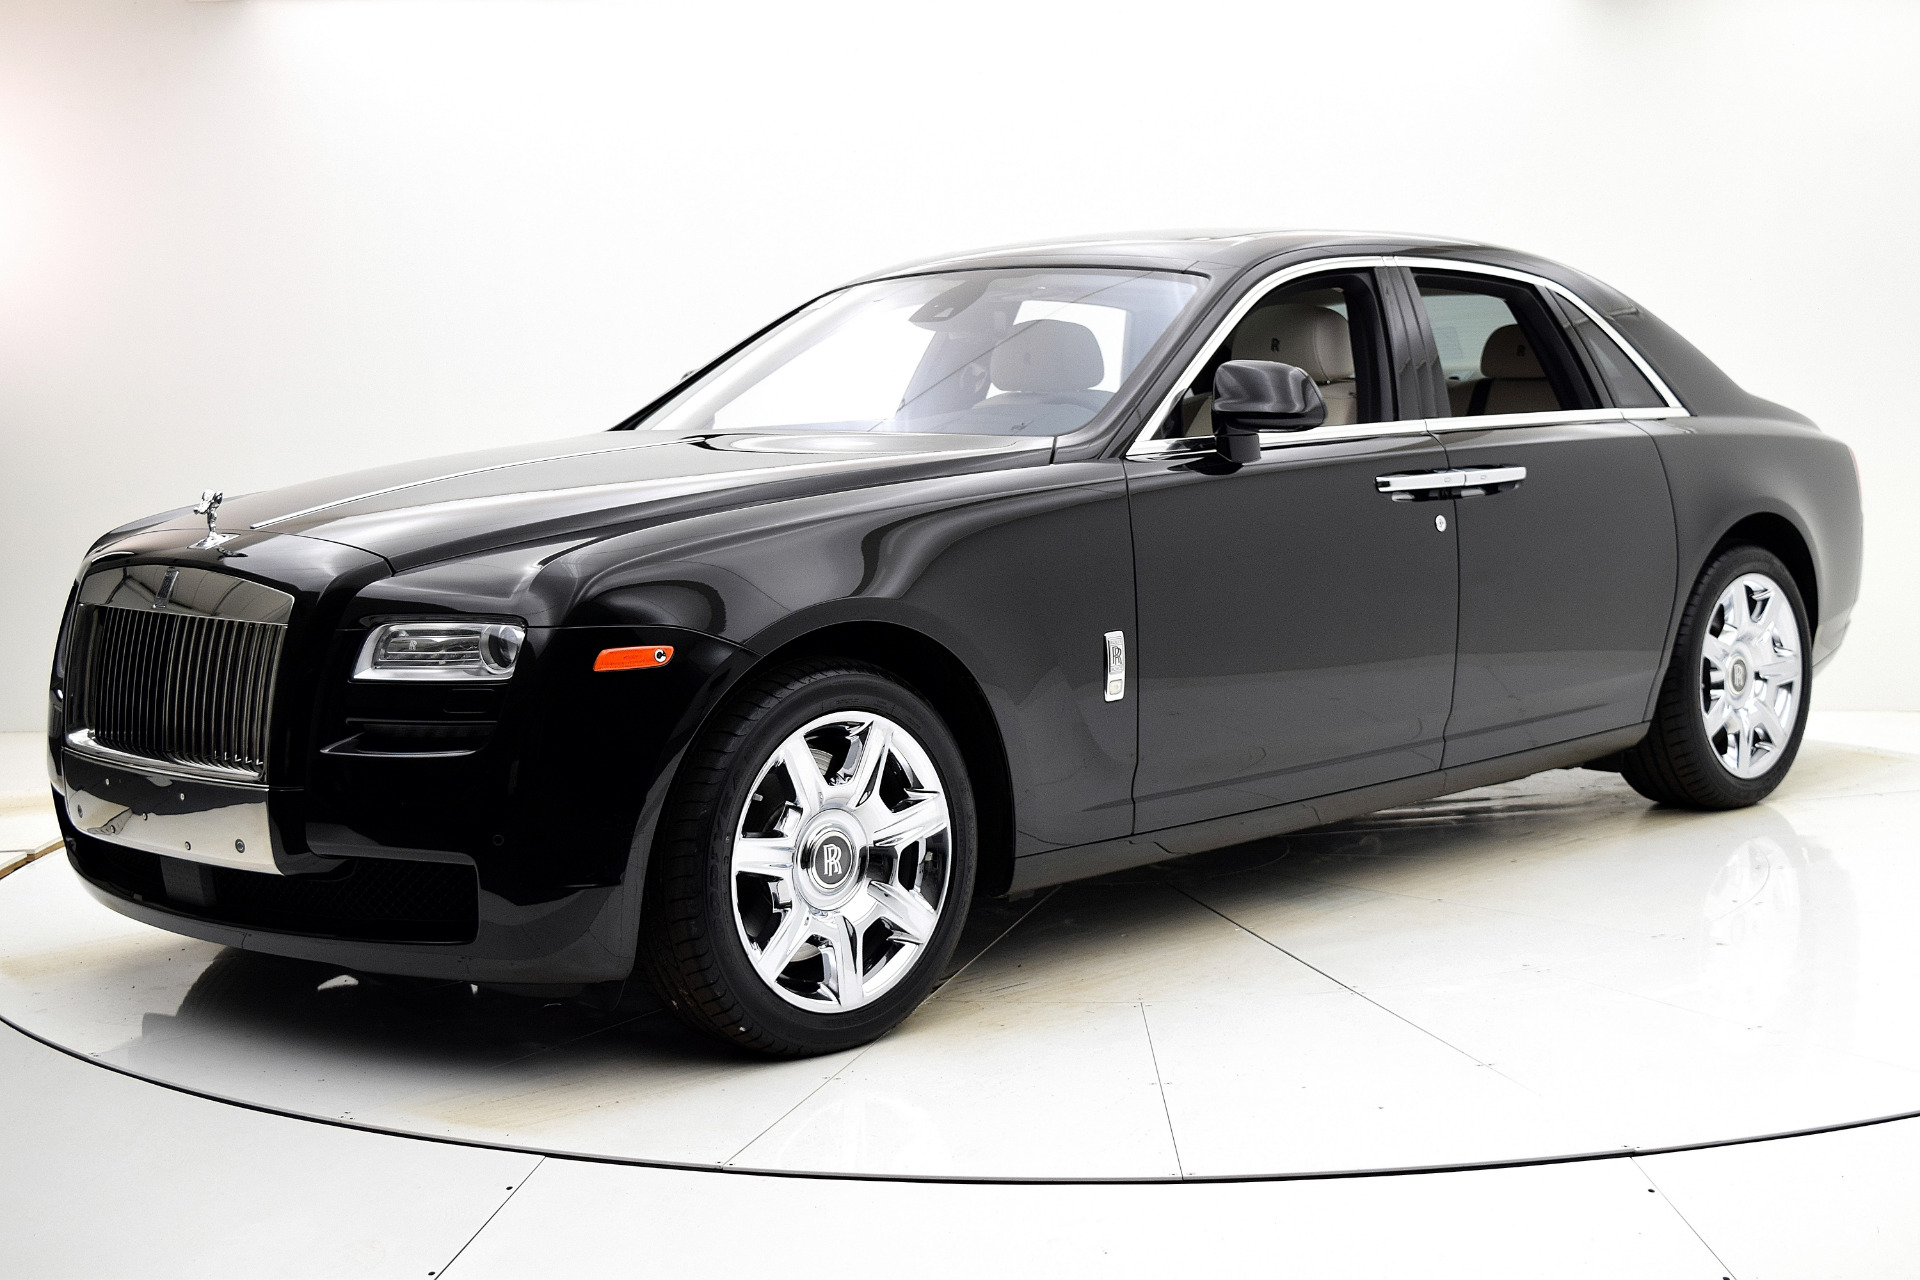 Used 2012 Rolls-Royce Ghost for sale Sold at Bentley Palmyra N.J. in Palmyra NJ 08065 2